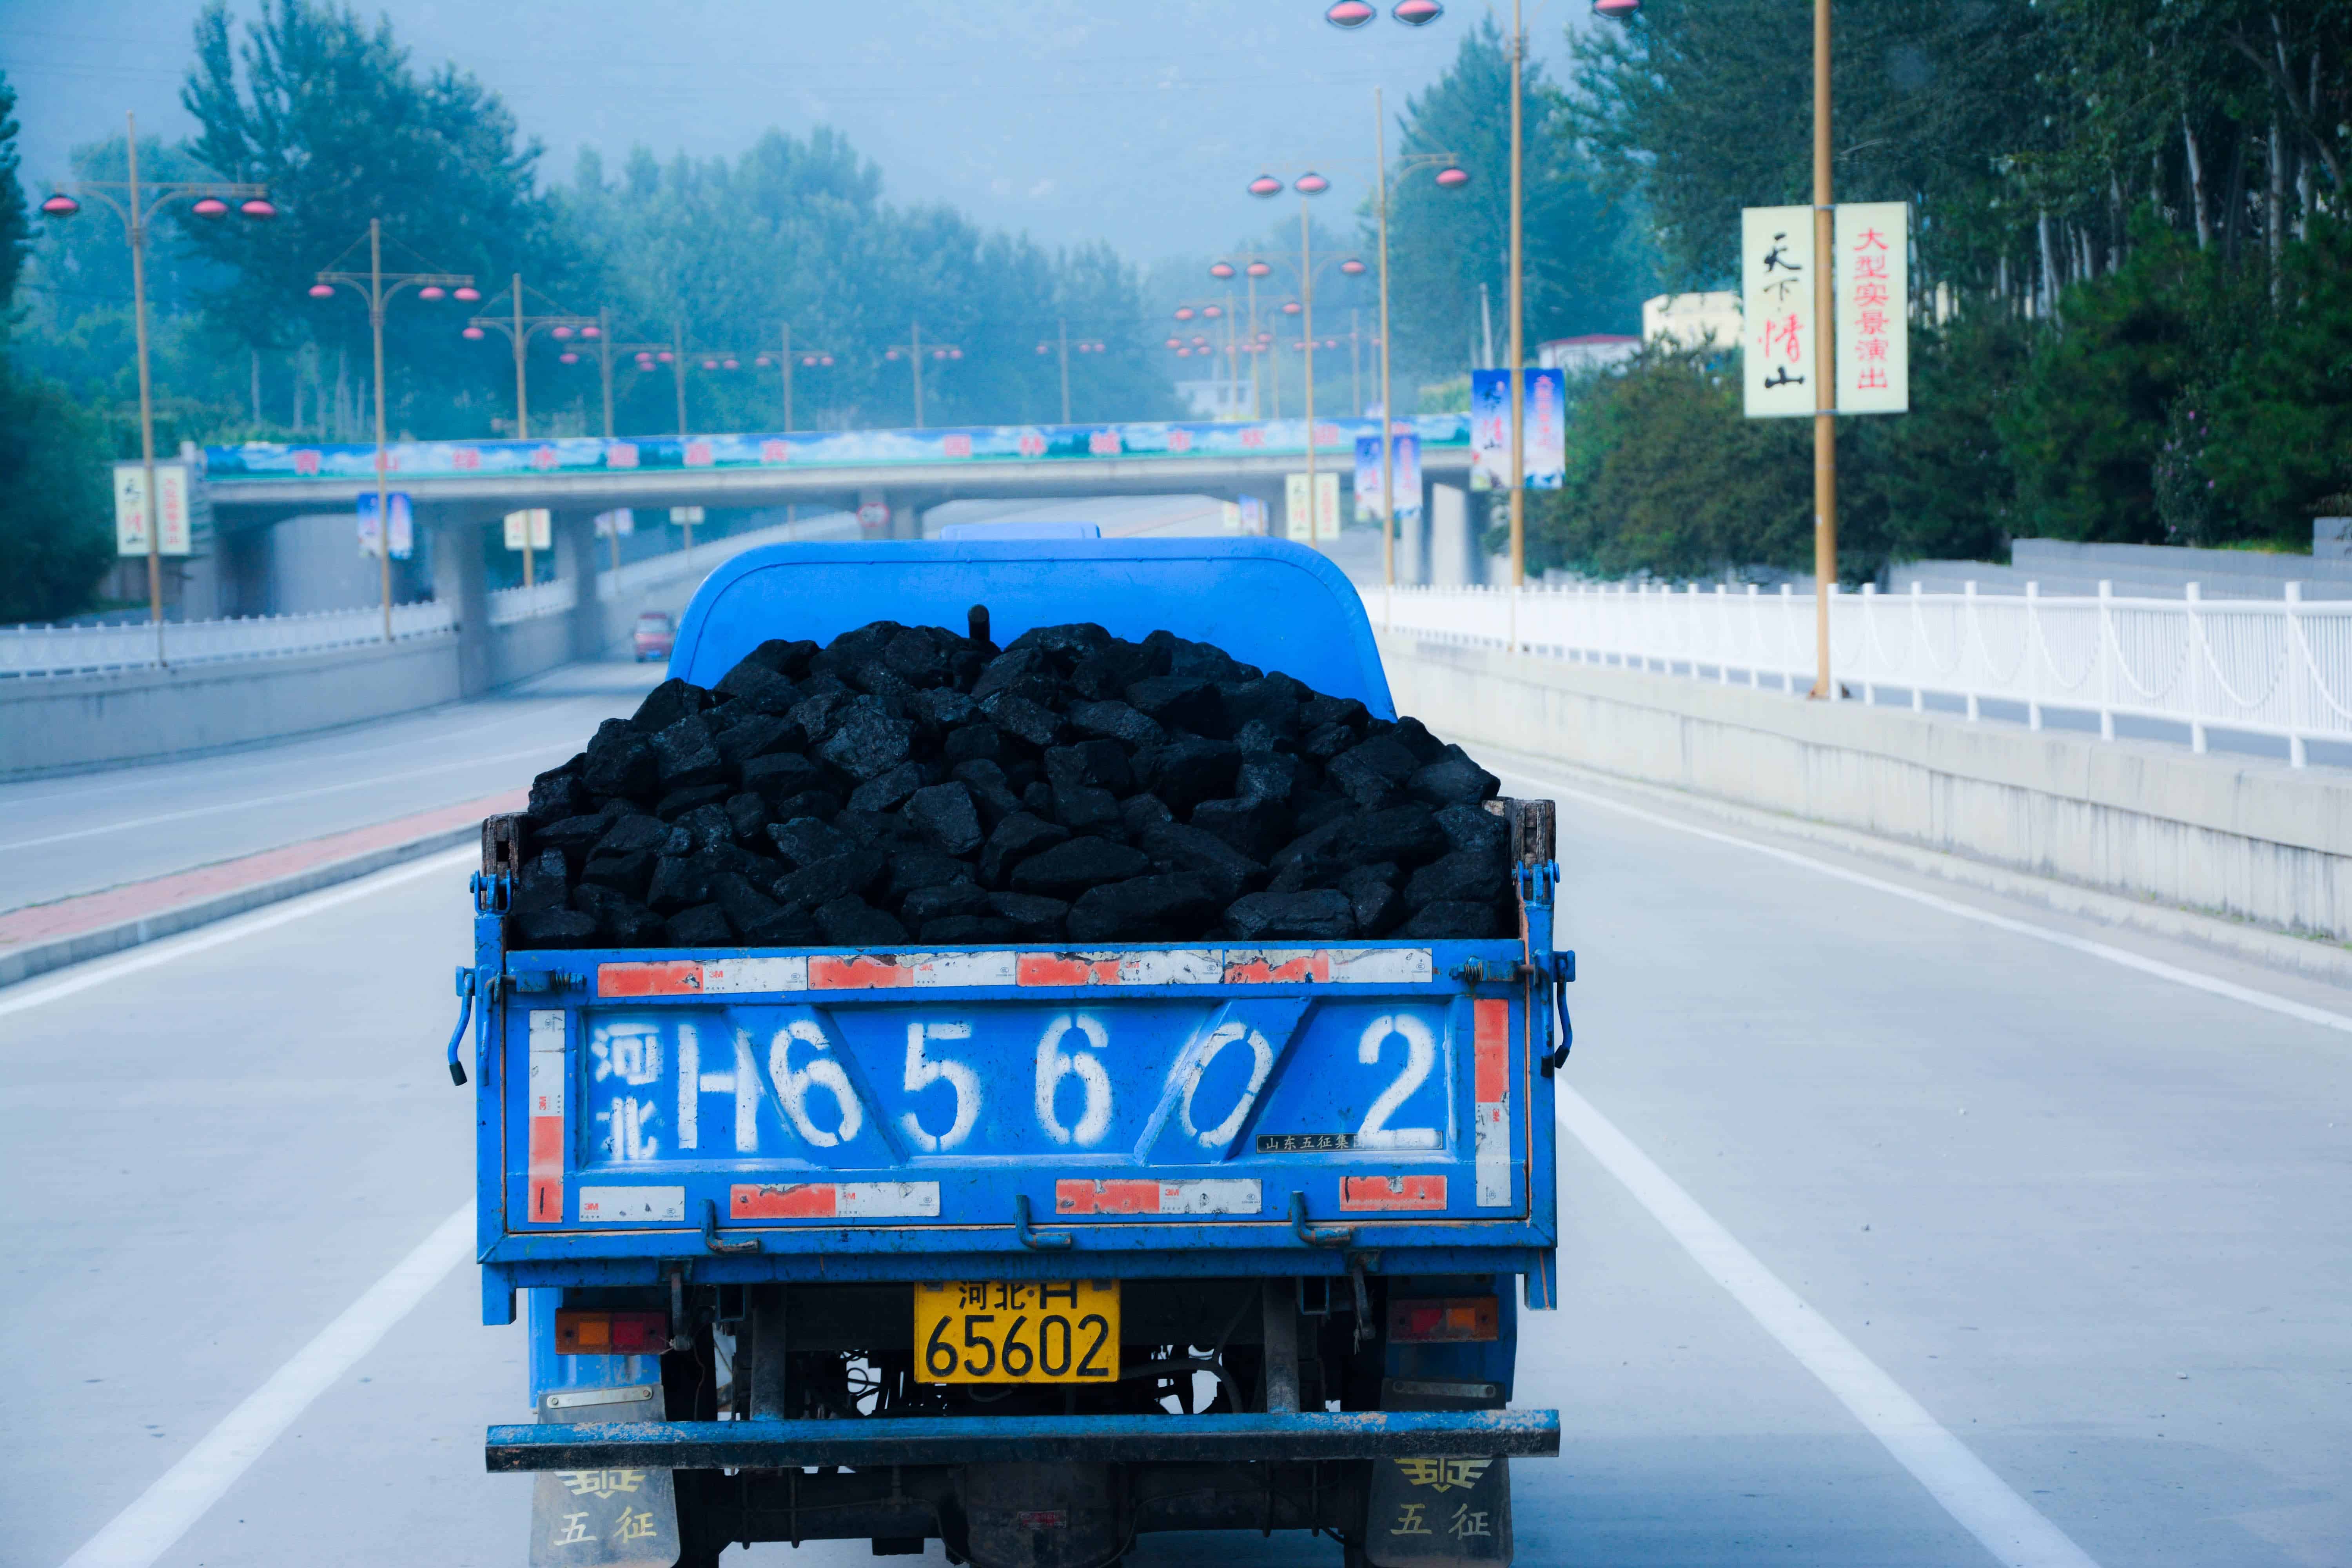 A truck transports coal in Beijing. Credit: Han Jun Zeng (Flickr)